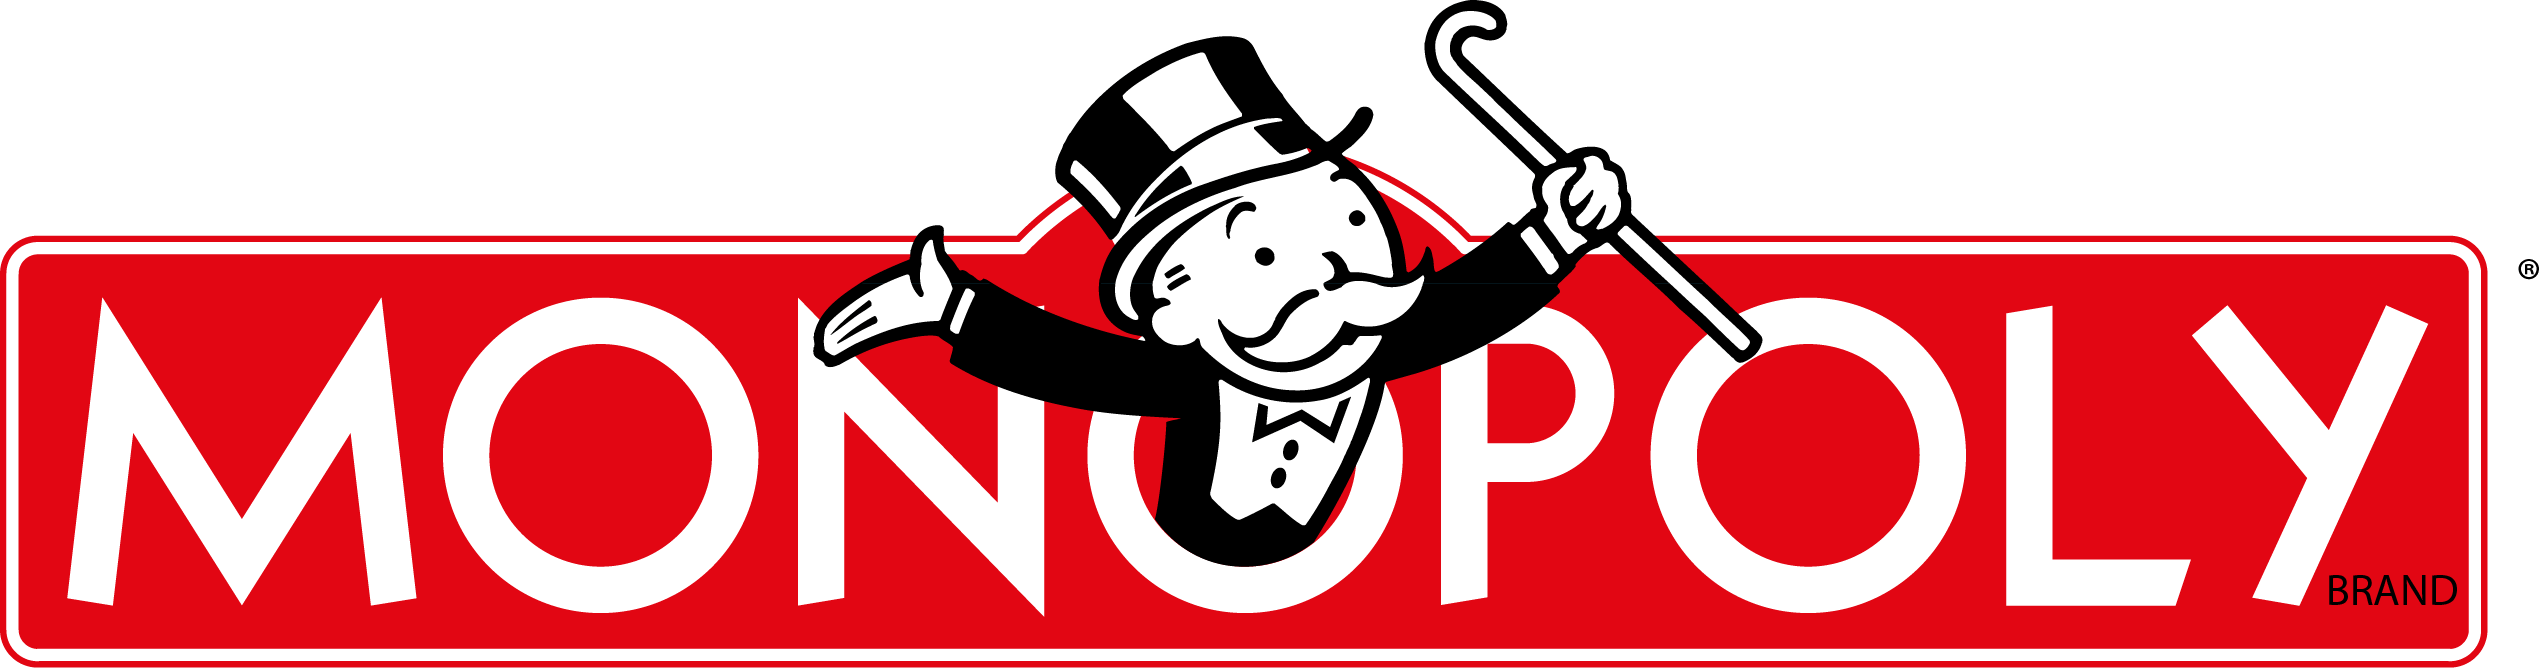 Monopoly Logo - Monopoly Logo Vector Free Download